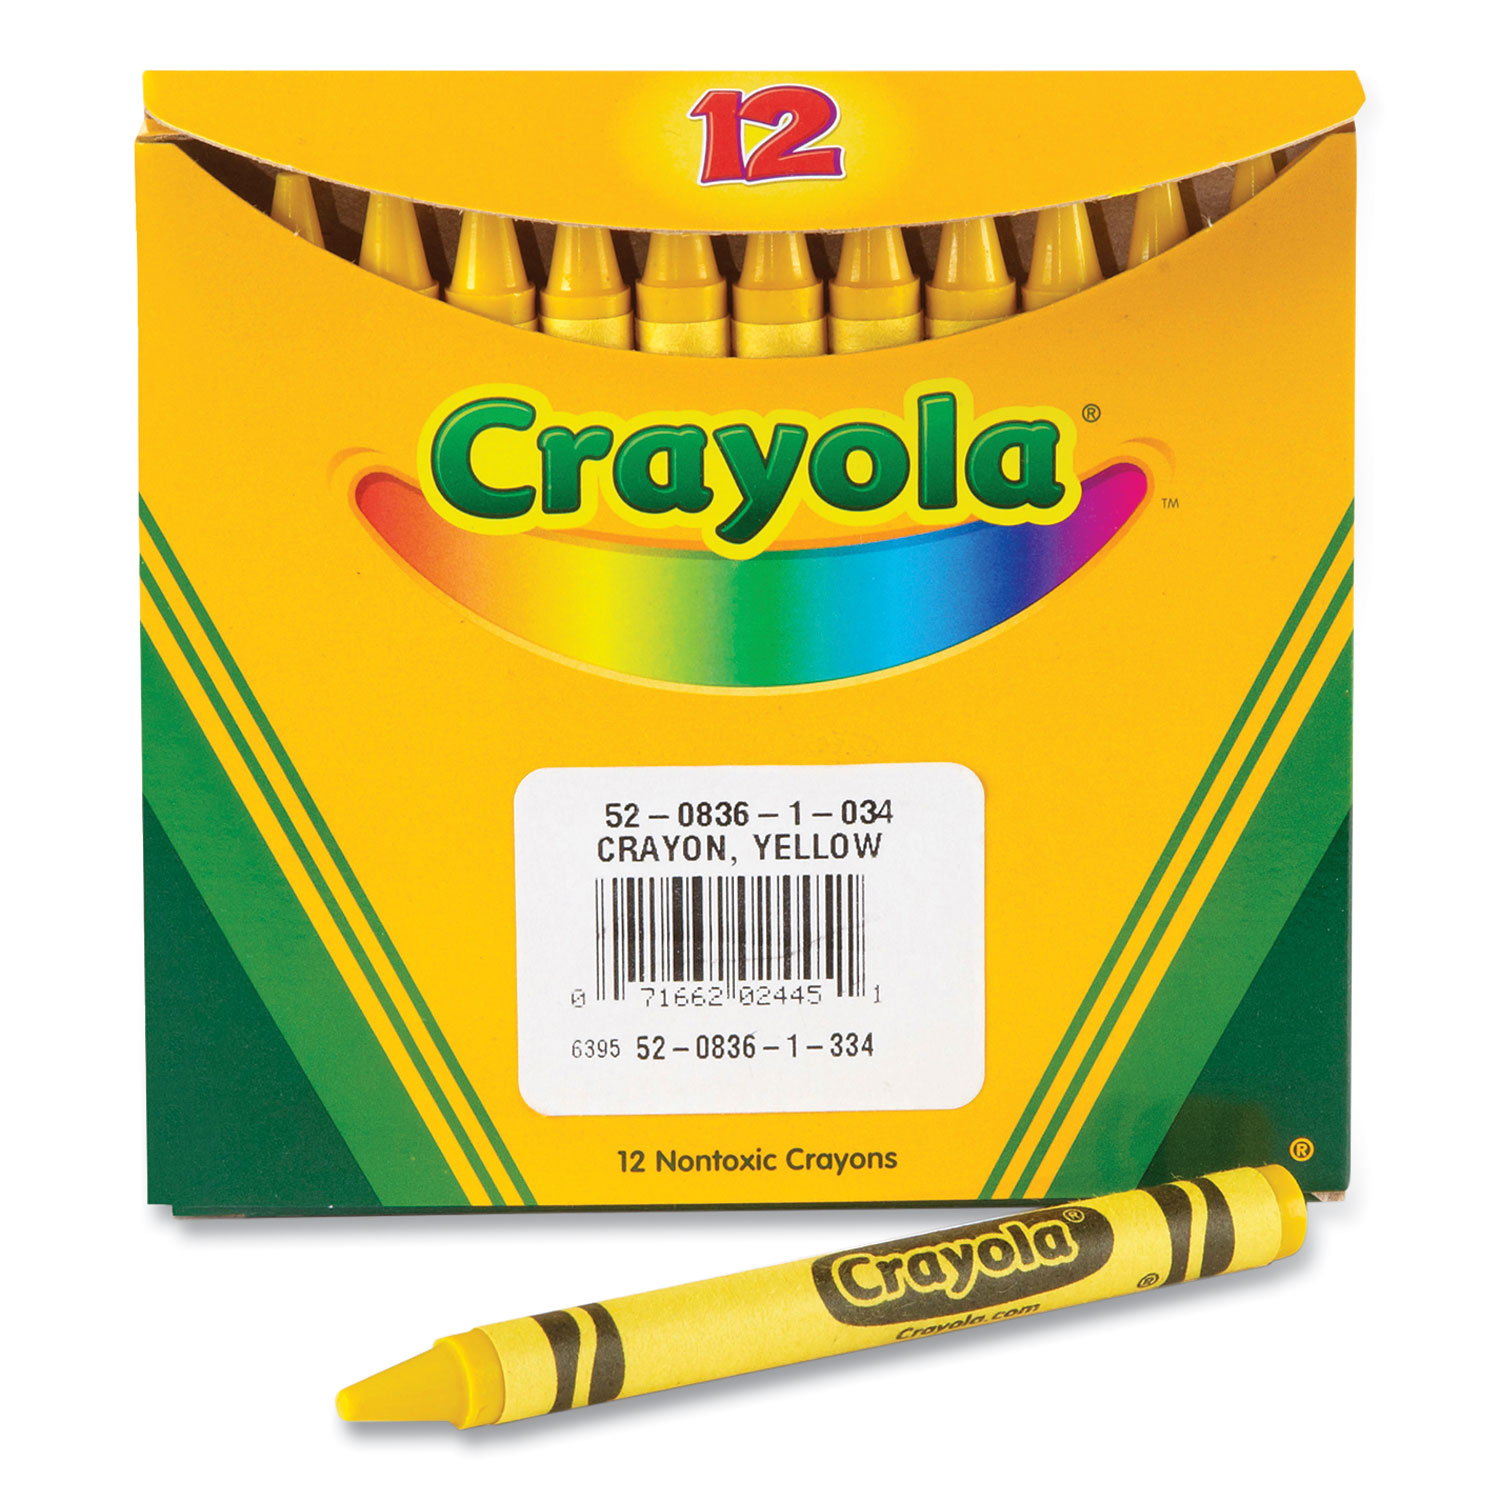  Crayola Black & White Construction Paper Bulk